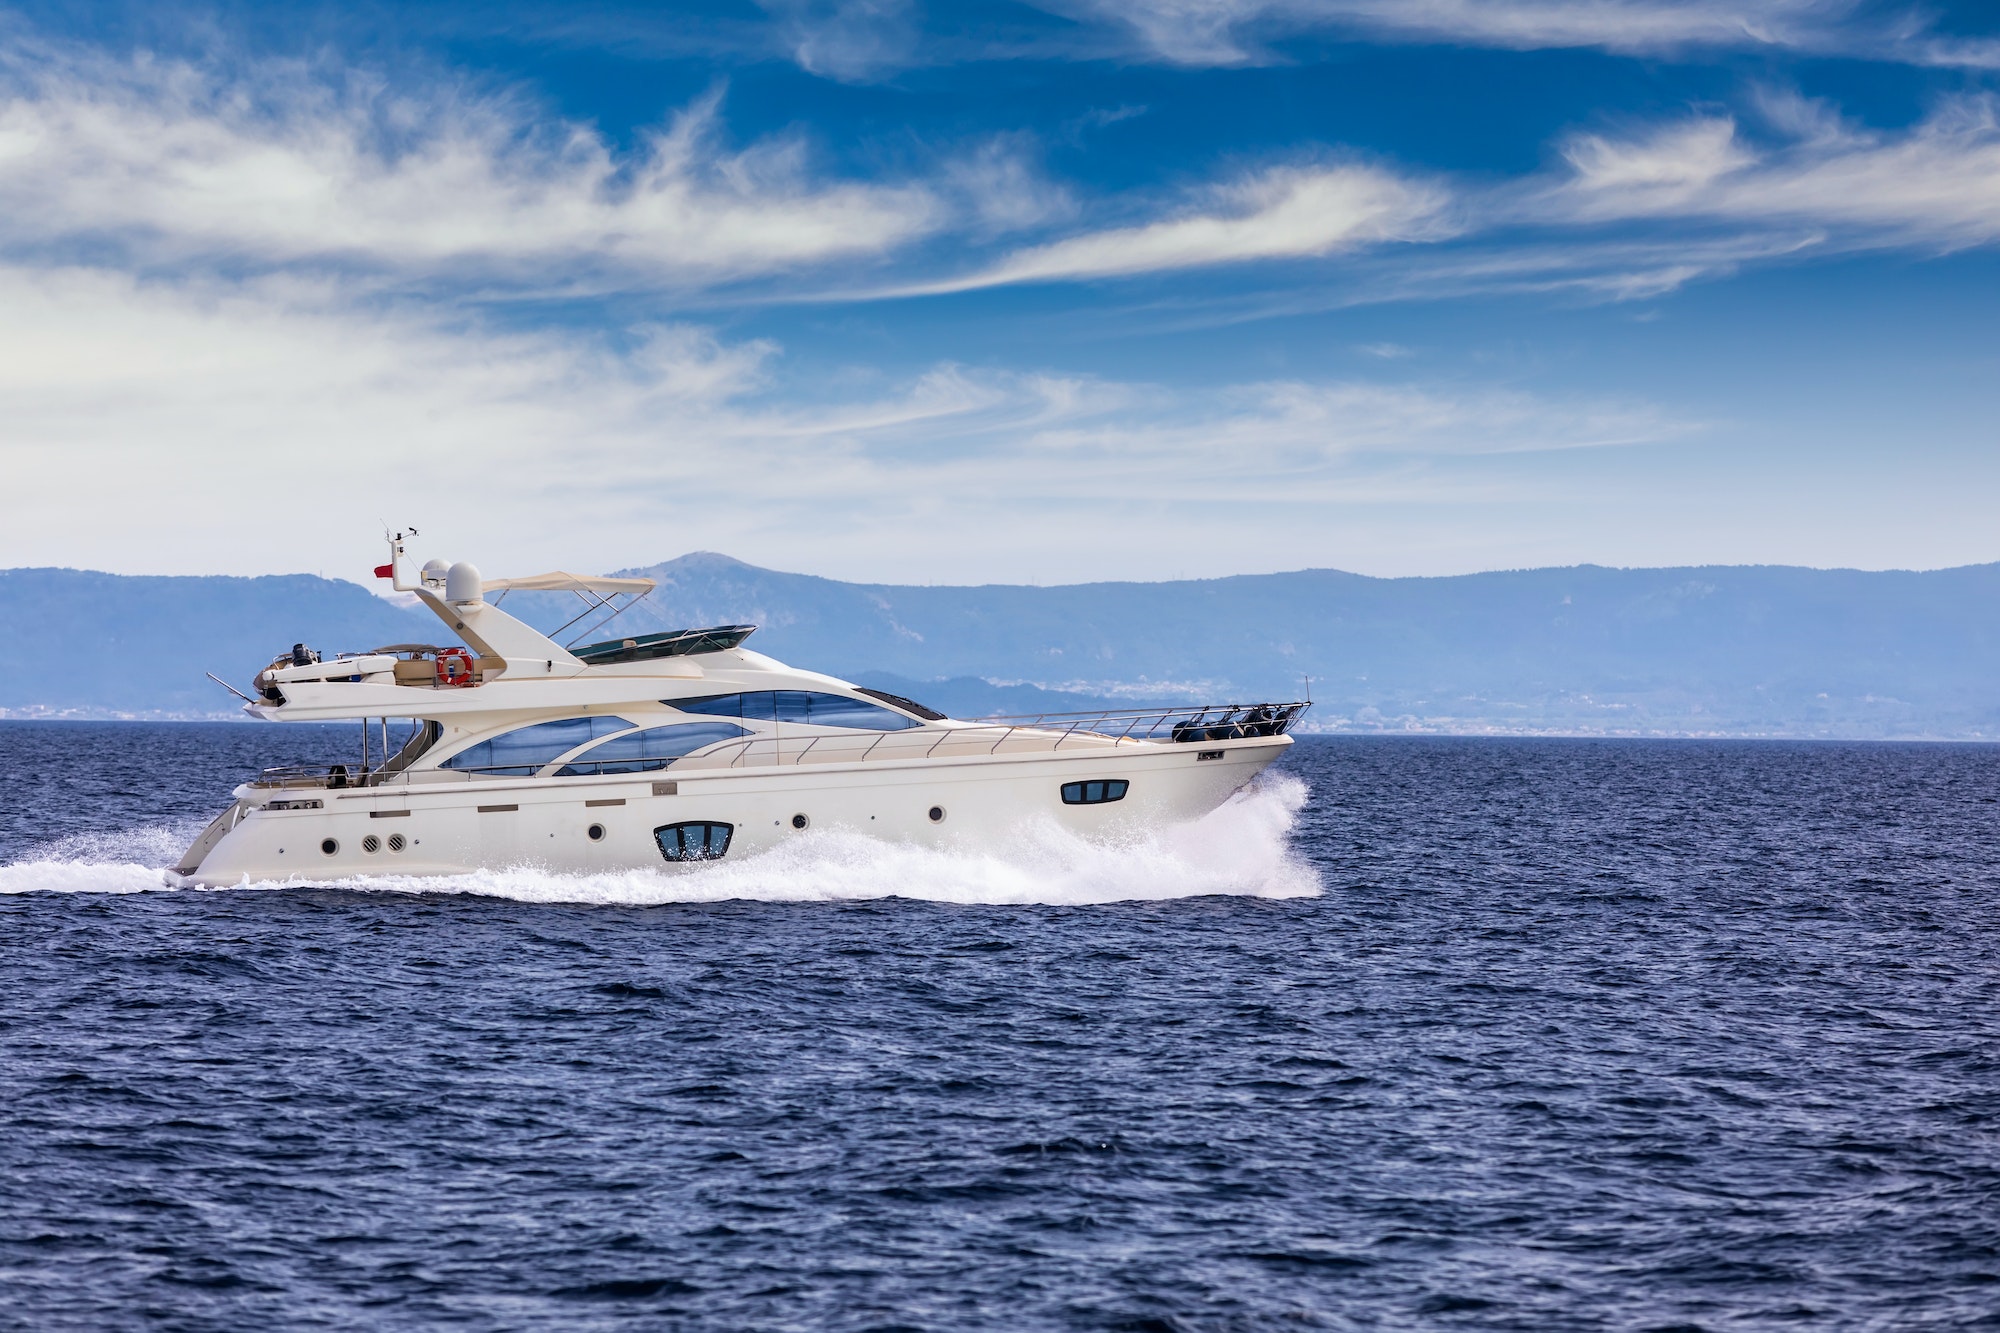 Motor yacht at sea. Yachting, luxury sea vacation.